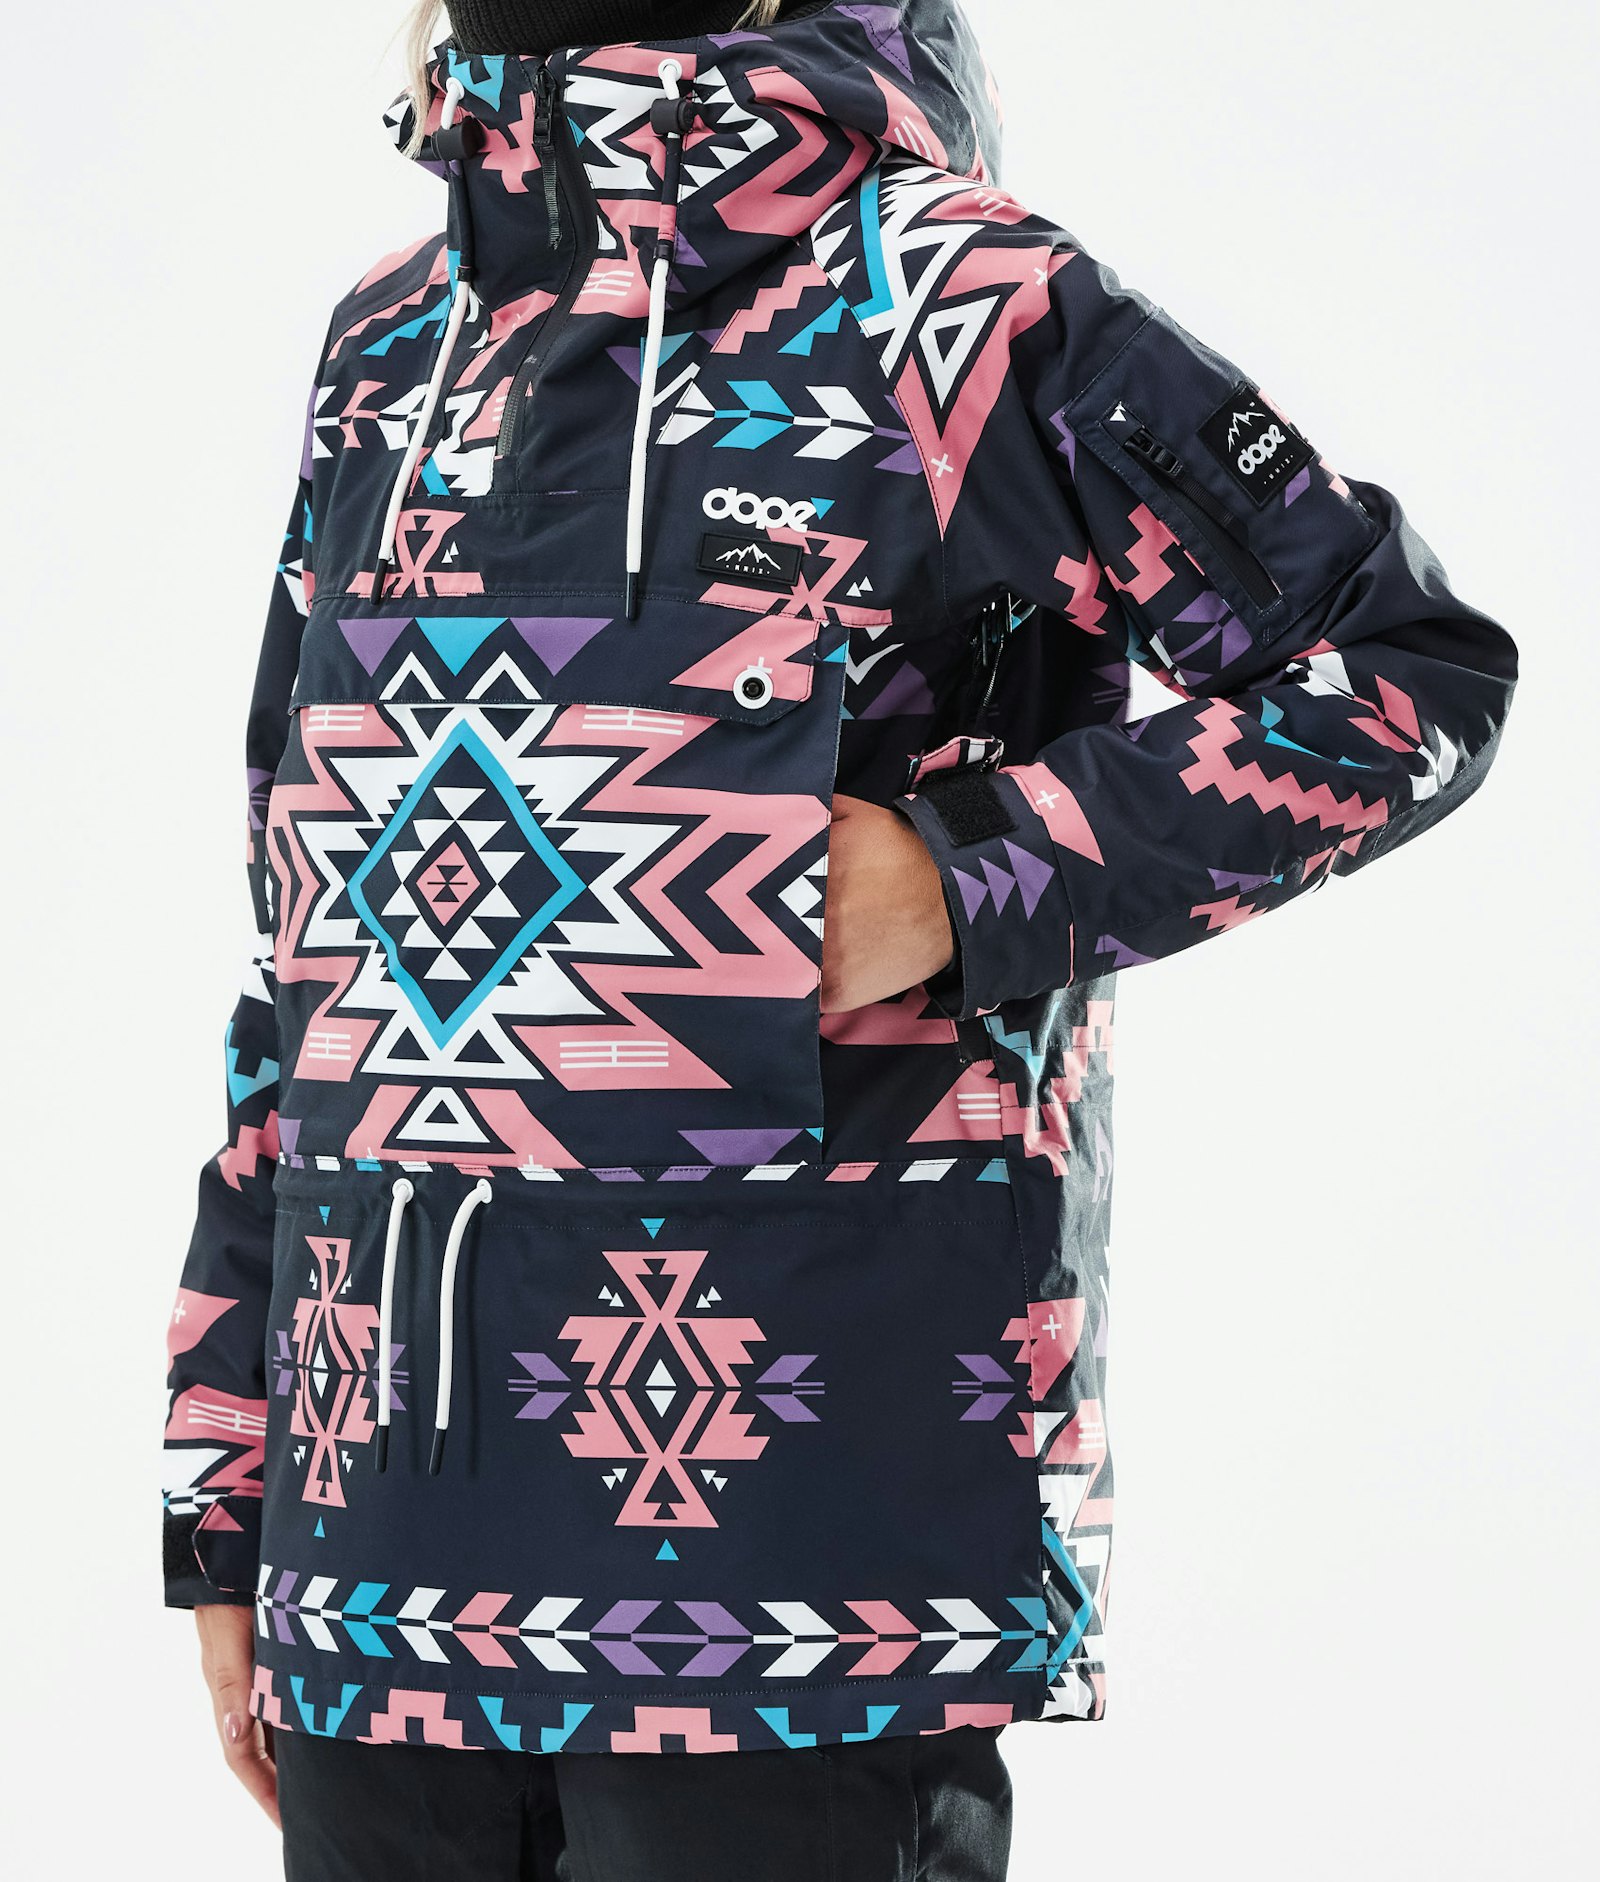 Annok W 2020 Snowboard Jacket Women Inka Pink